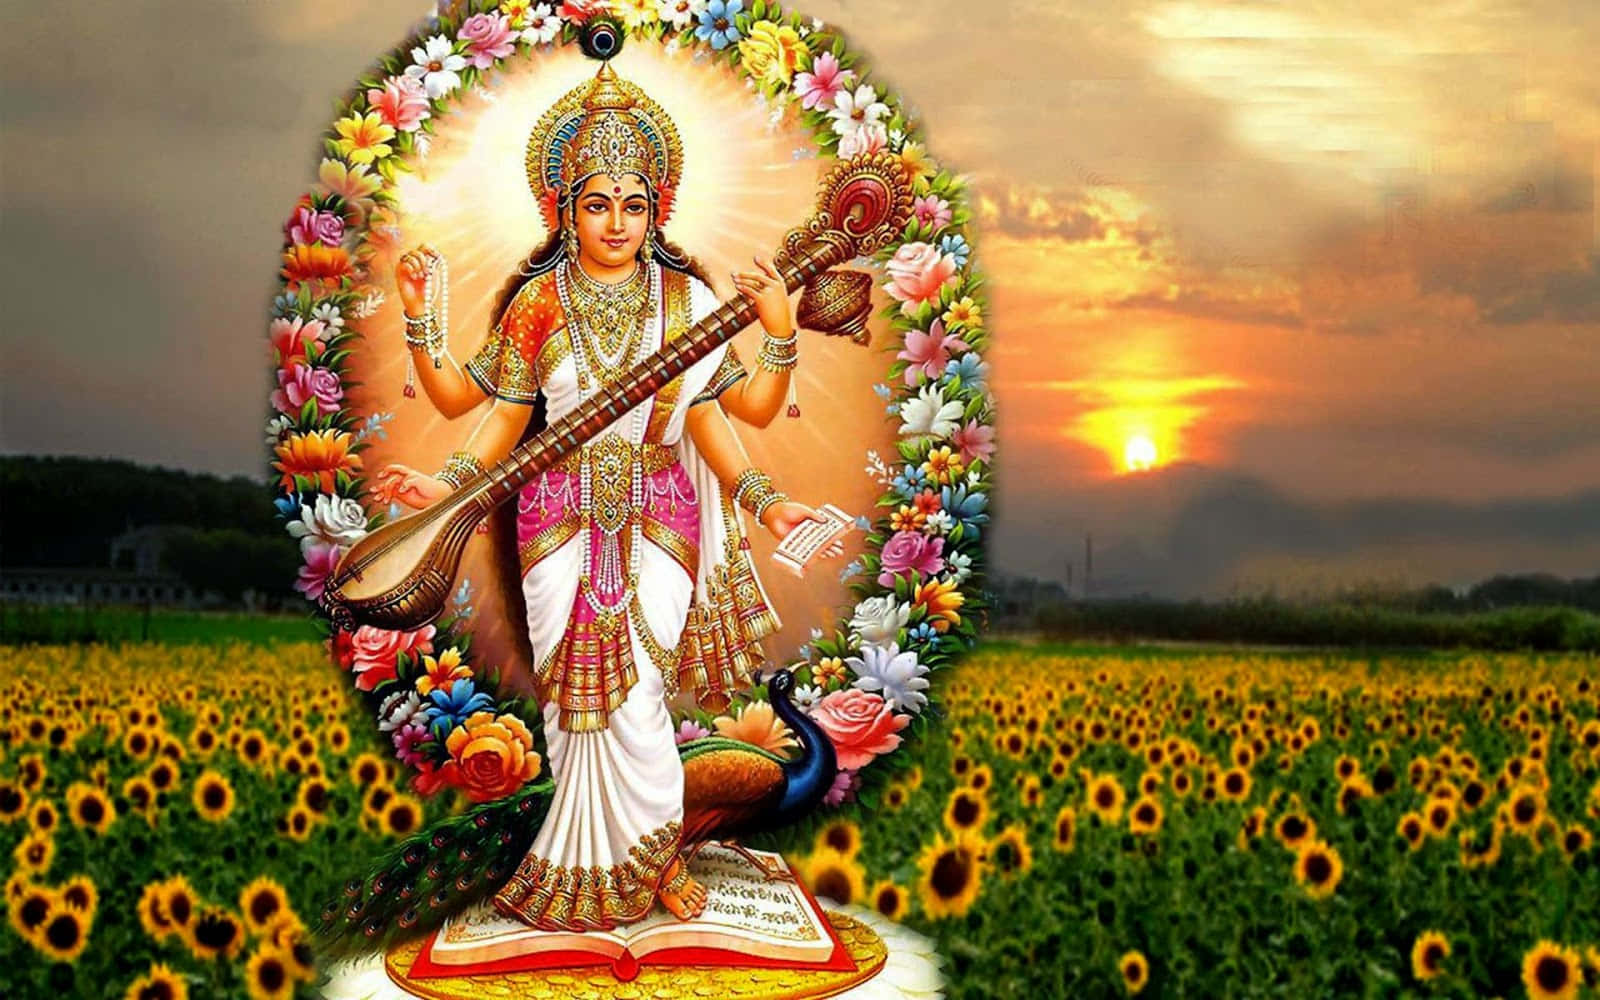 Imagende La Diosa Hindú Saraswati.